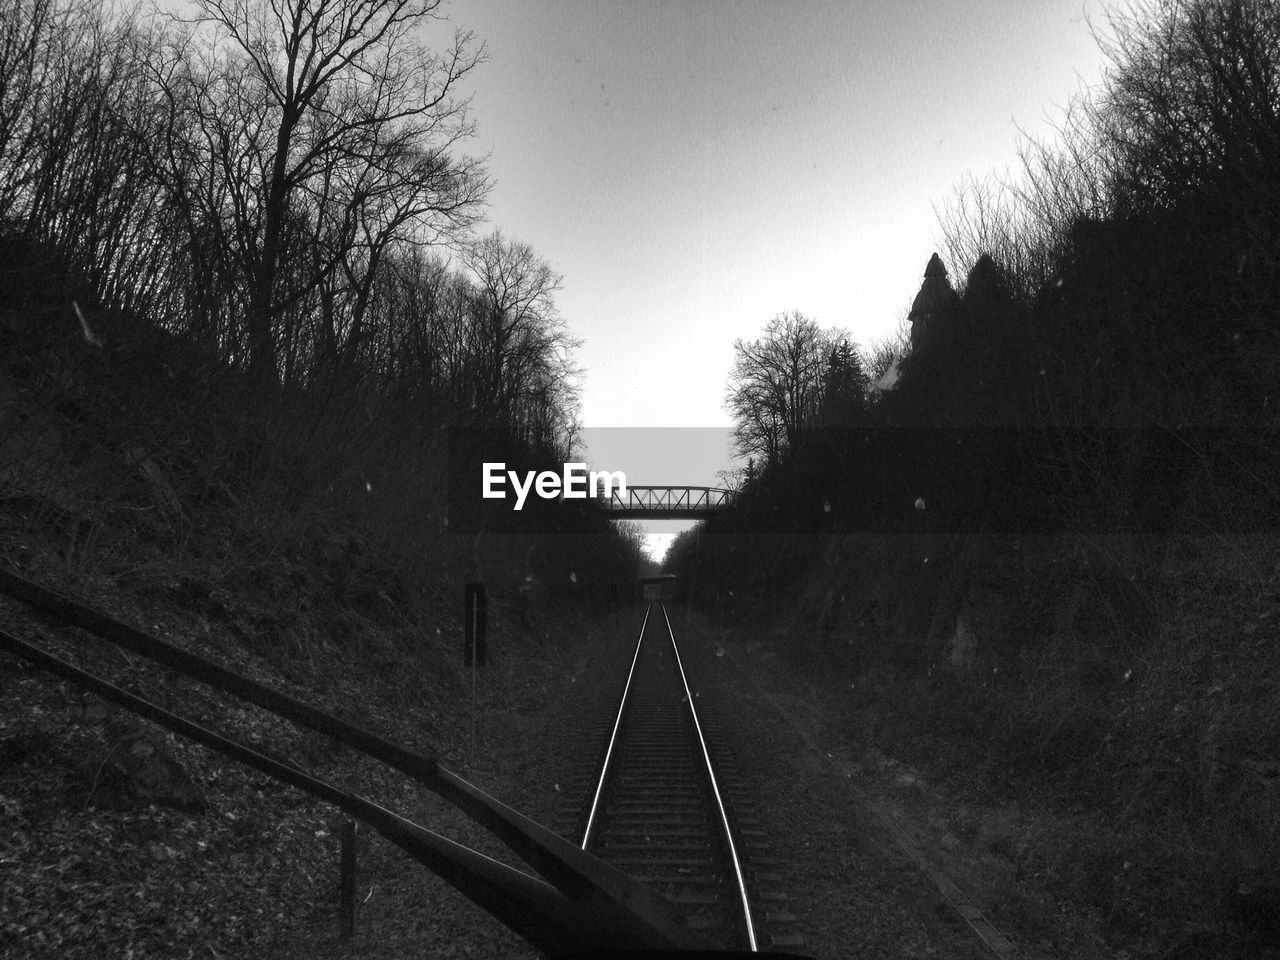 Railway tracks amidst mountains seen through train windshield